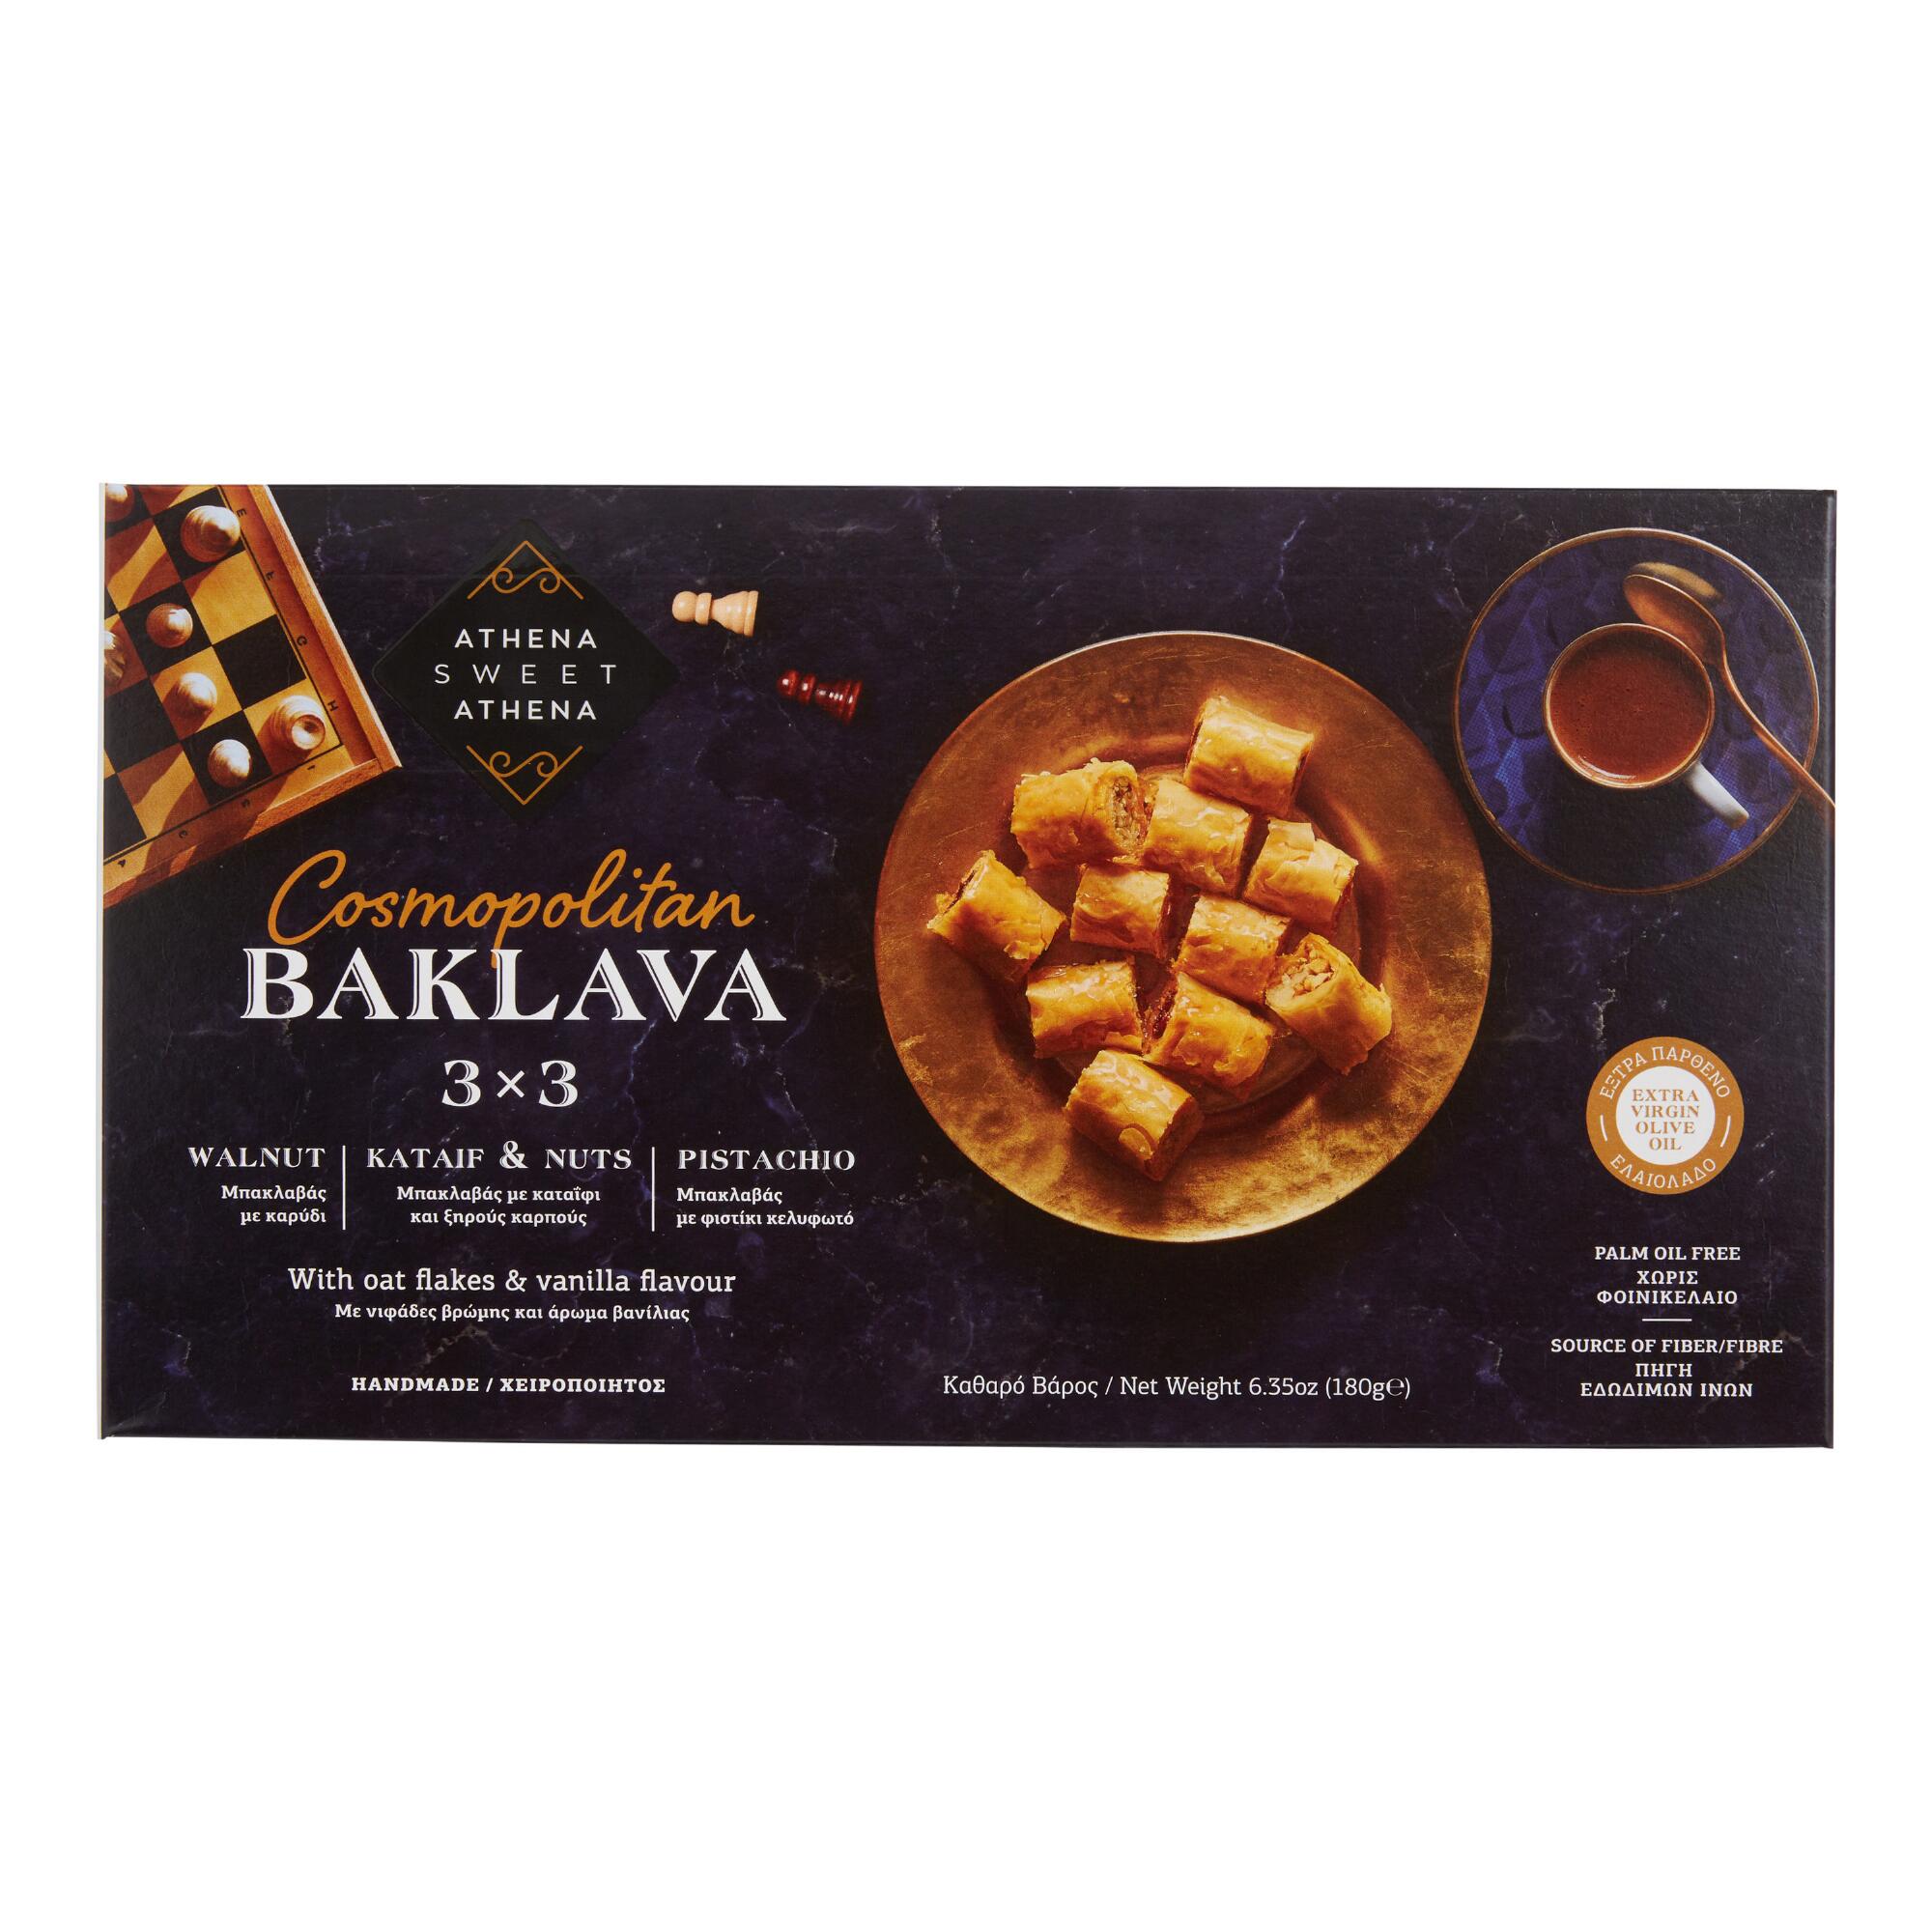 Athena Sweet Athena Cosmopolitan Baklava Variety Box by World Market